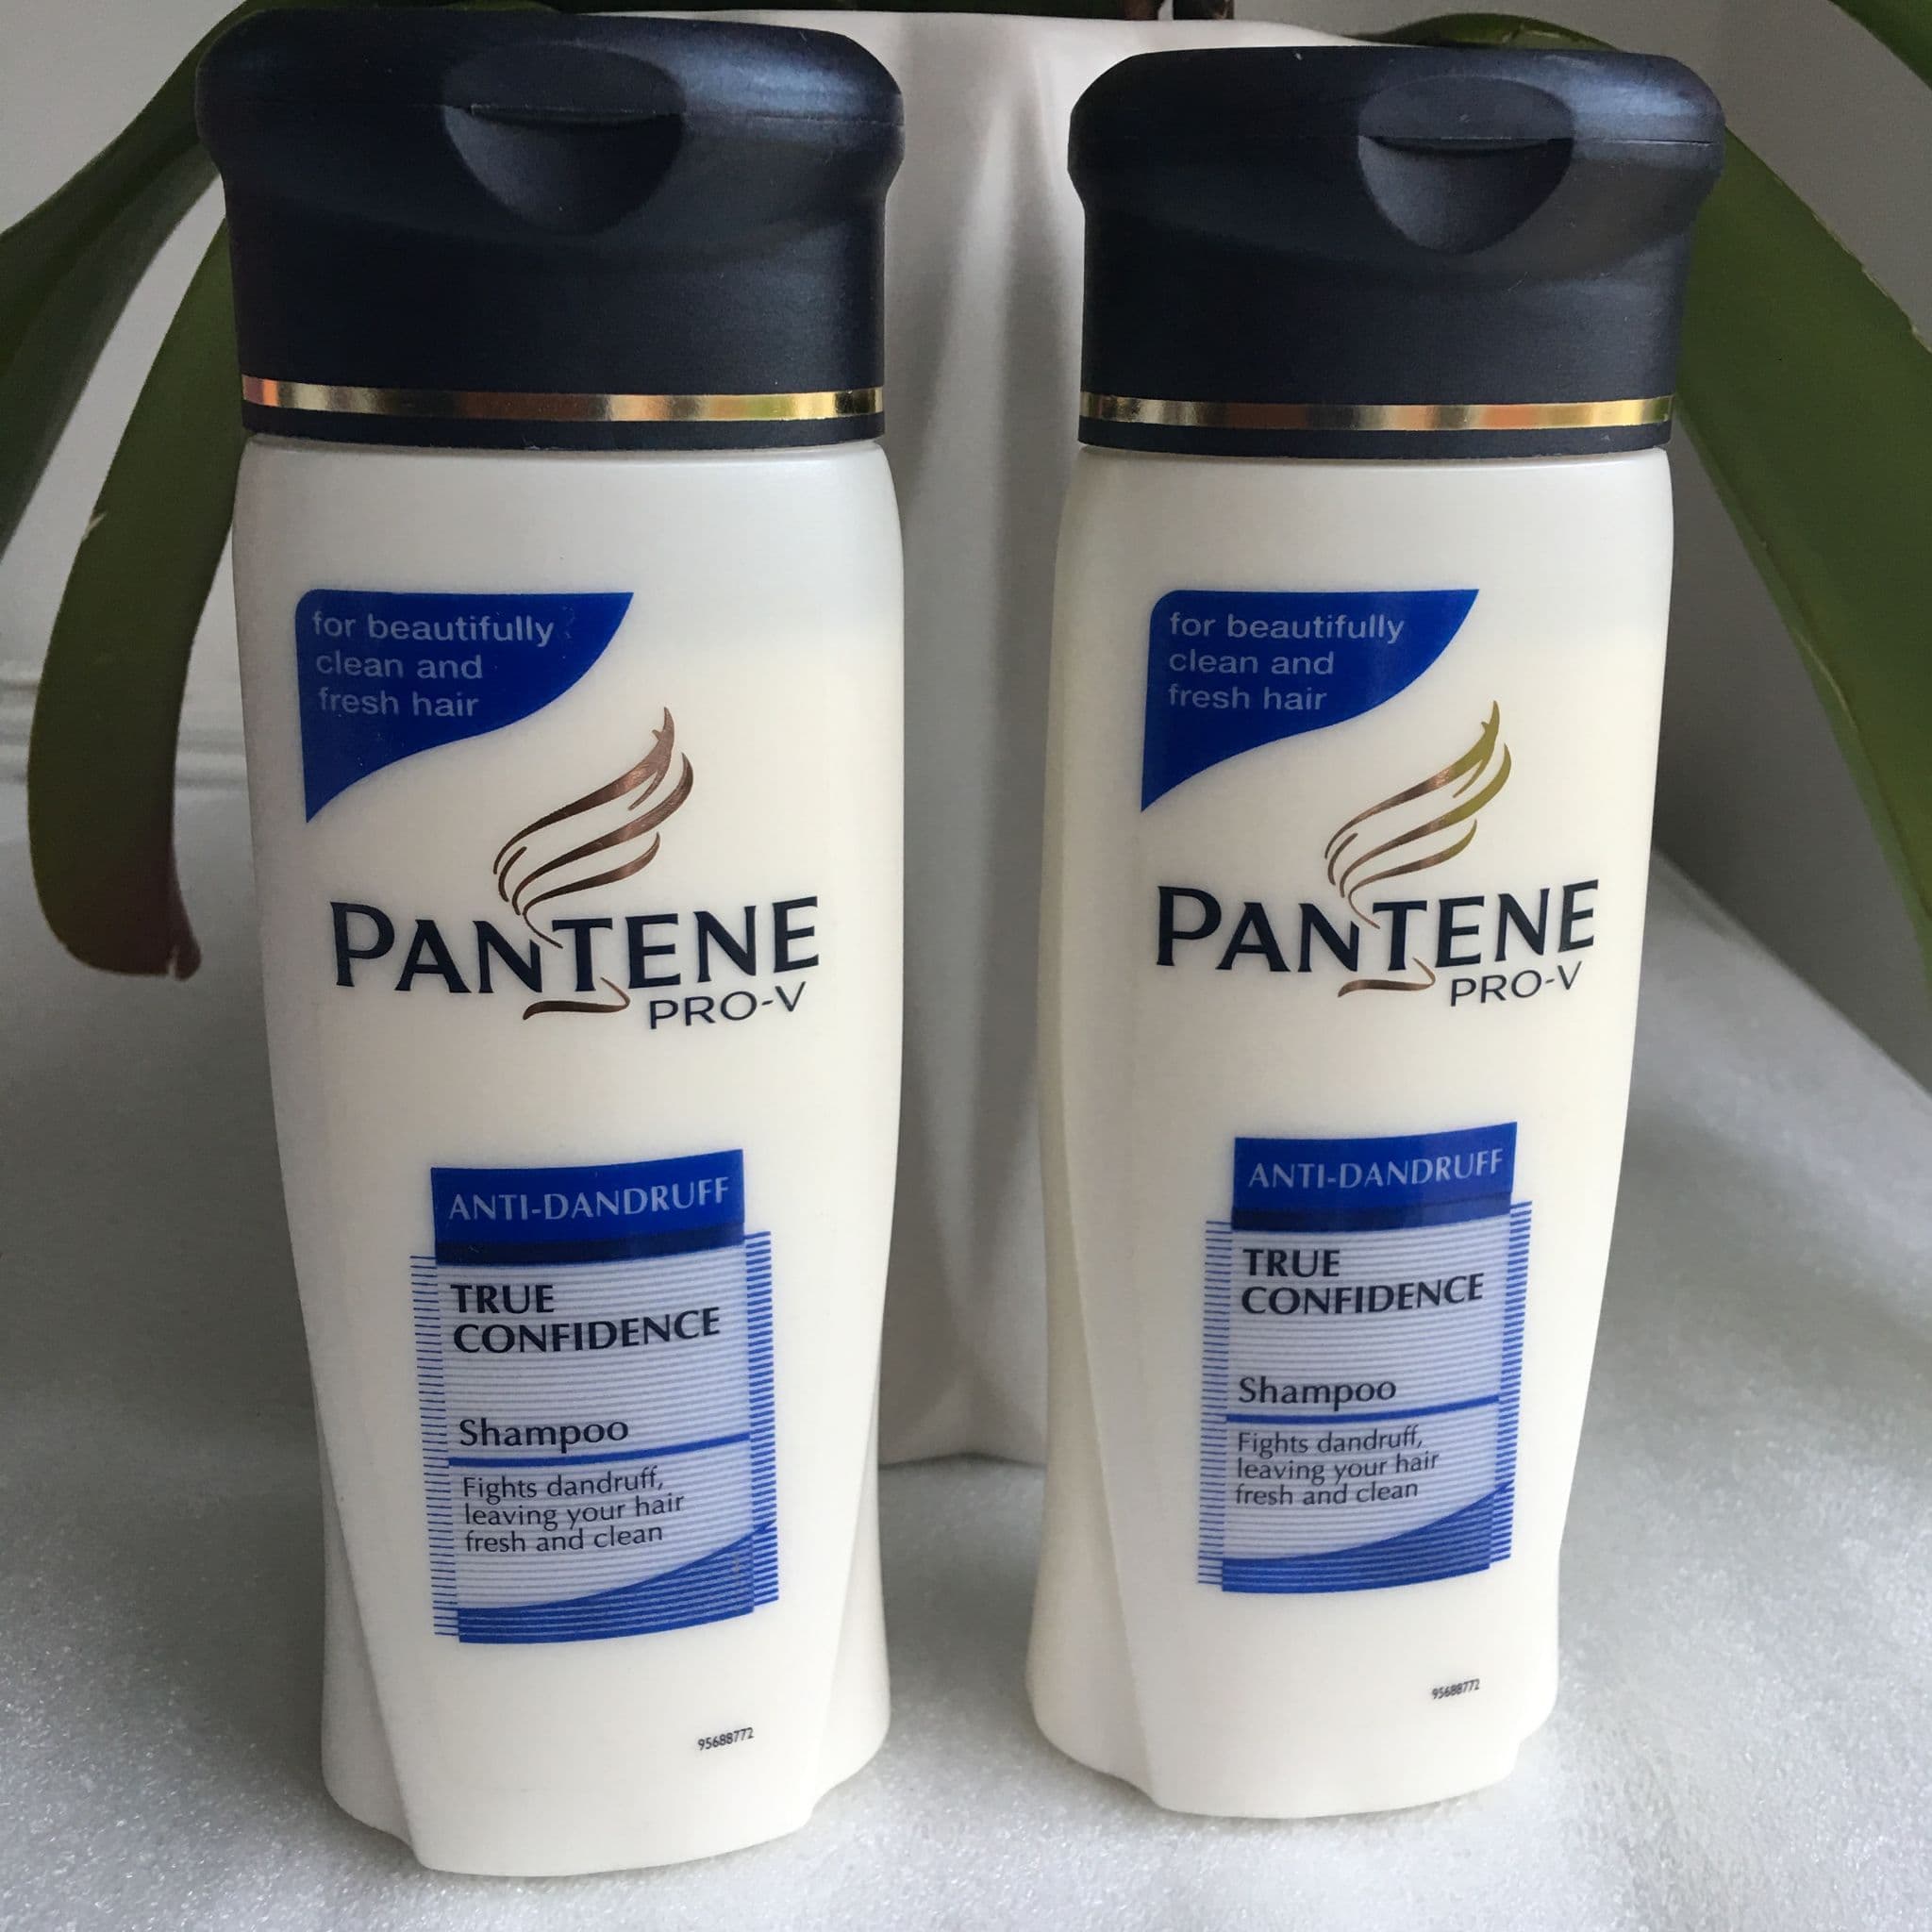 Pantene Pro-V Anti-Dandruff True Confidence Shampoo